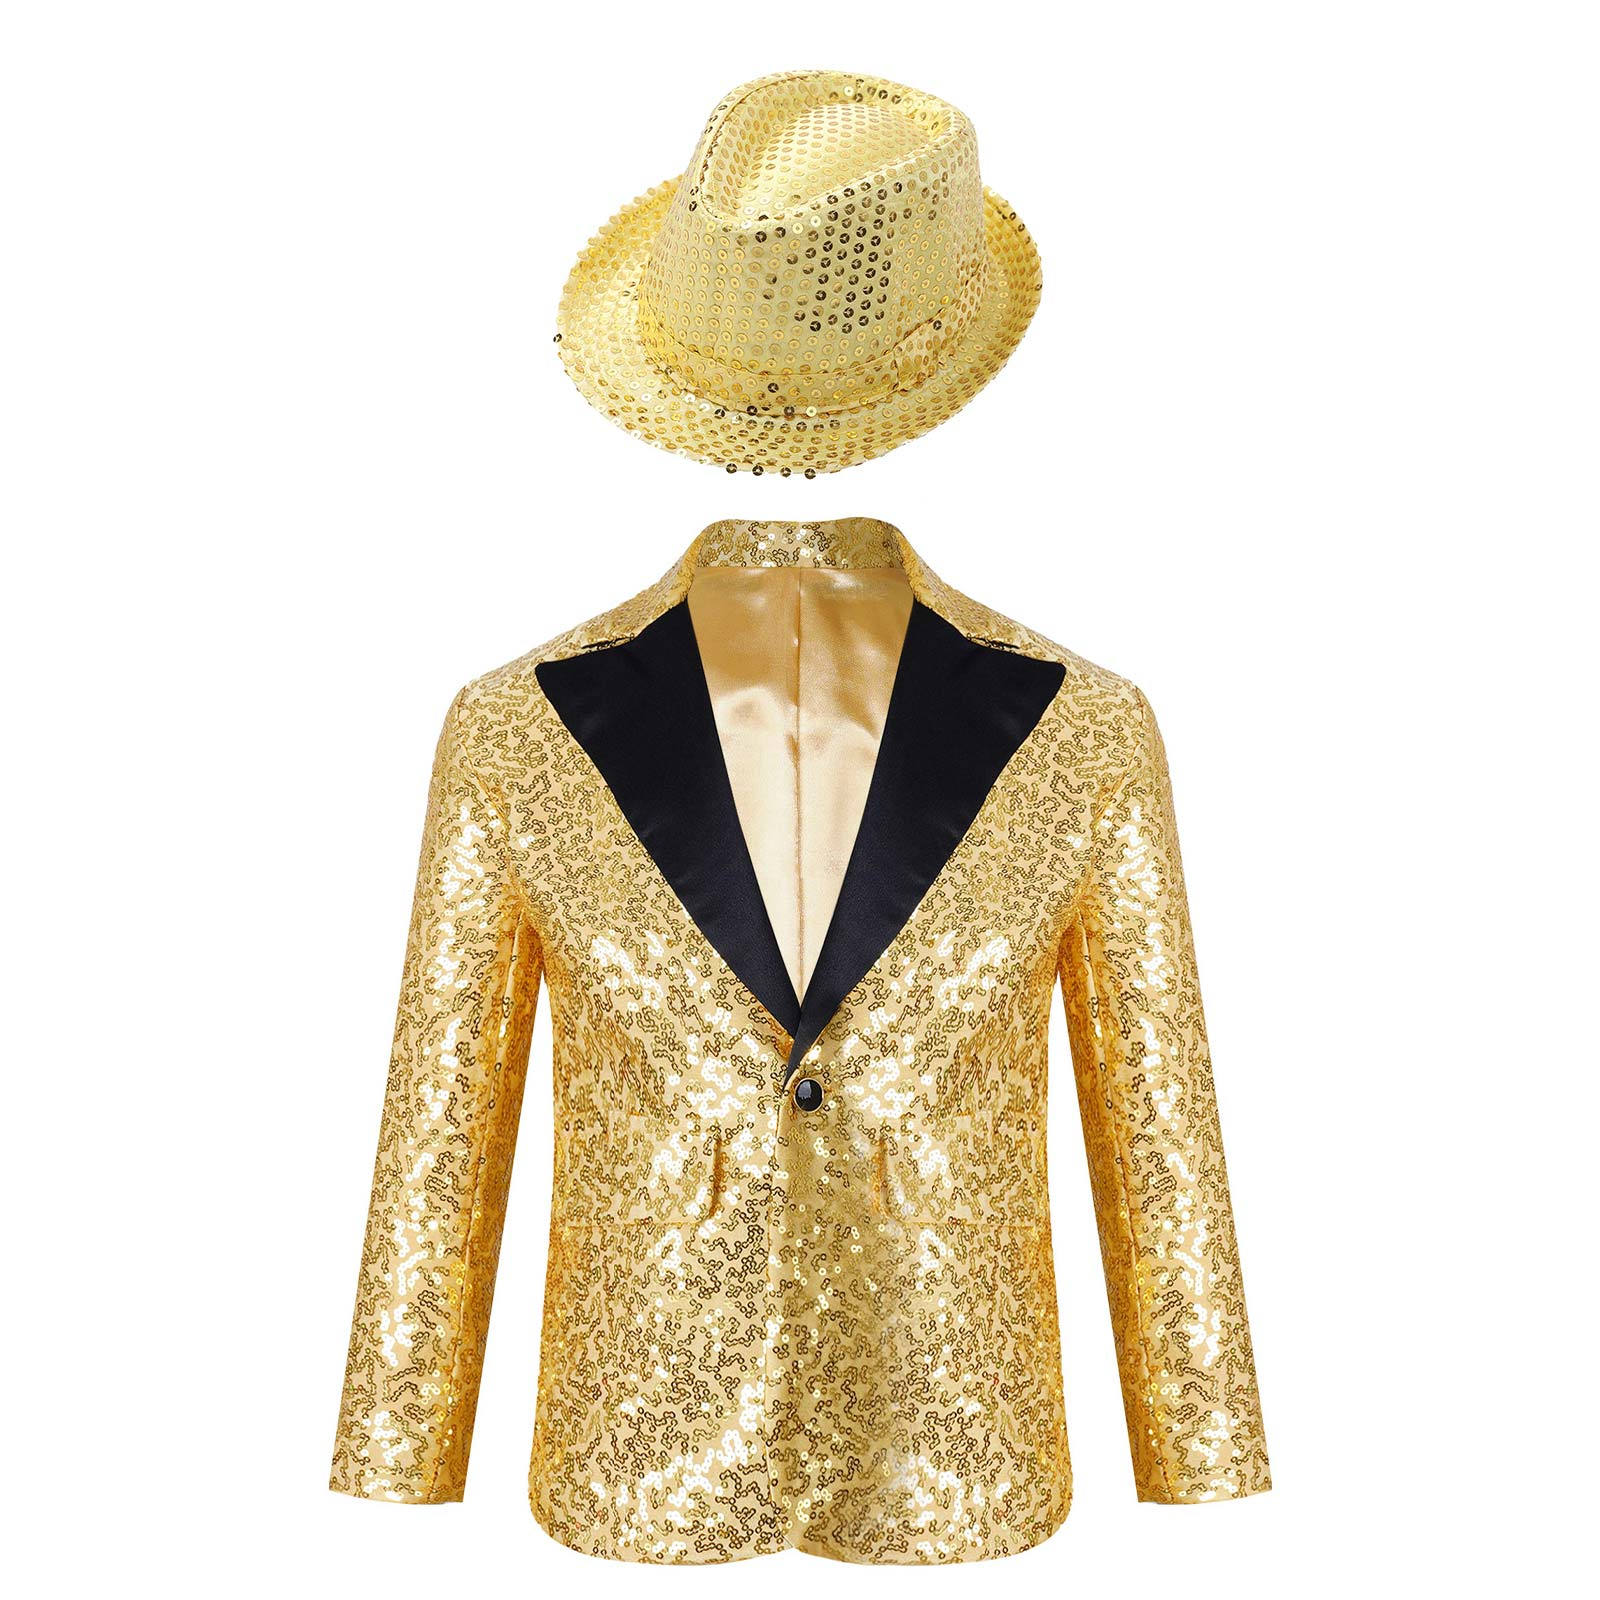 MSemis Kids Boys Shiny Sequin Suit Jacket Party Blazer Dance Tuxedo Costume with Hat,Size 6-16 Gold 12 - image 1 of 6